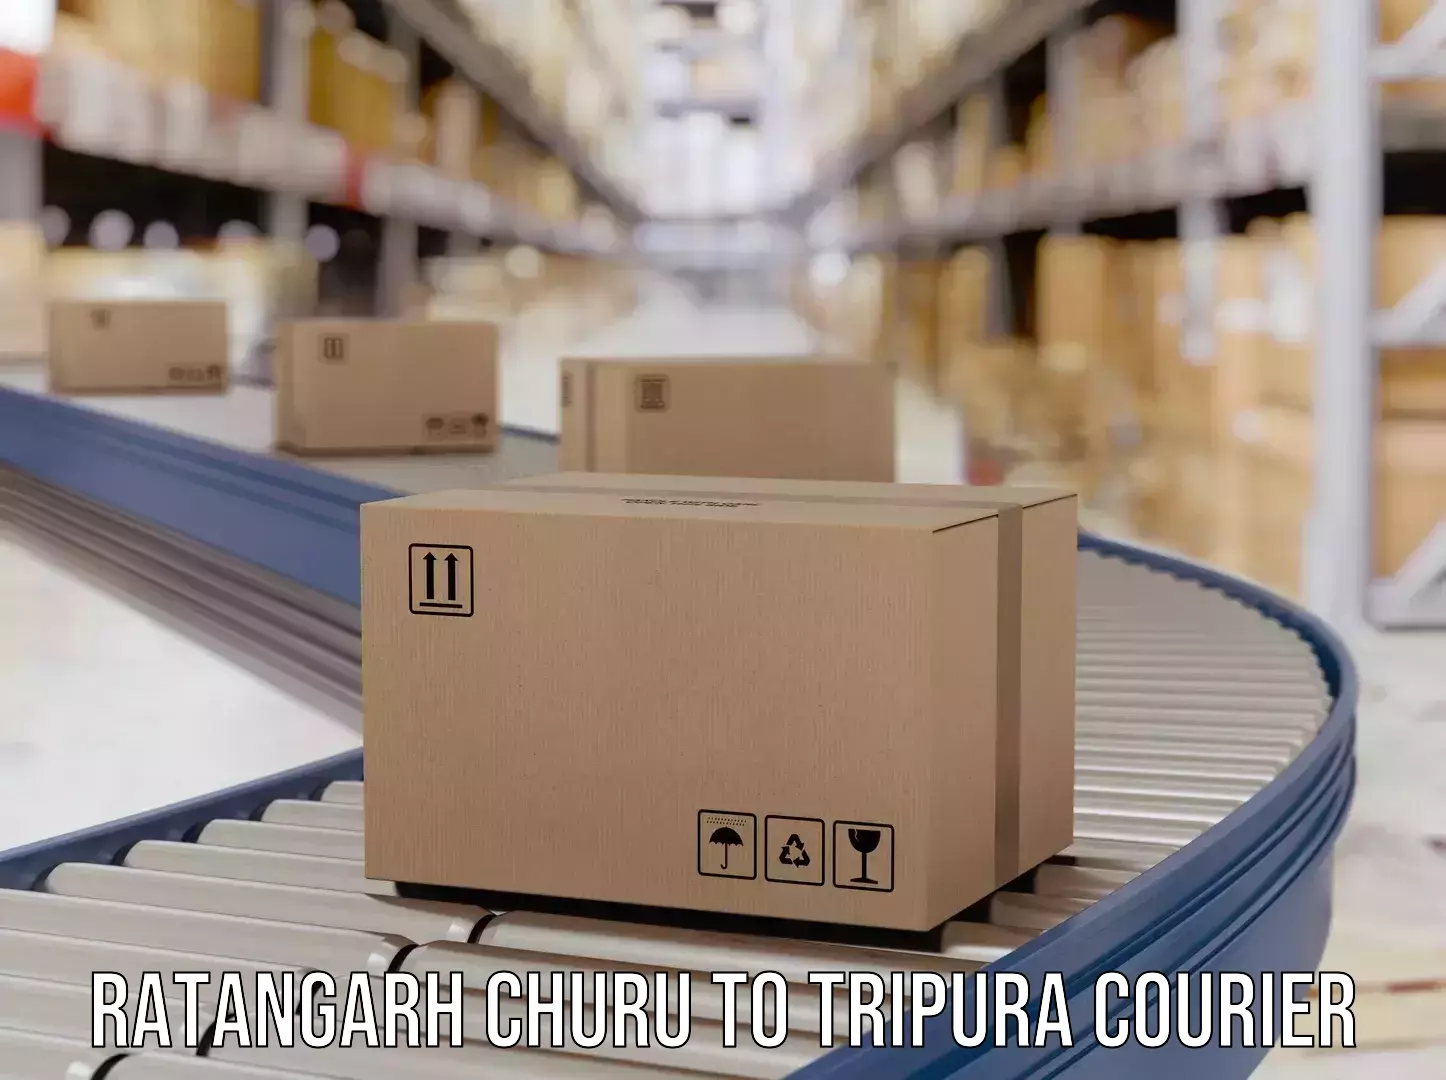 Package delivery network Ratangarh Churu to Agartala